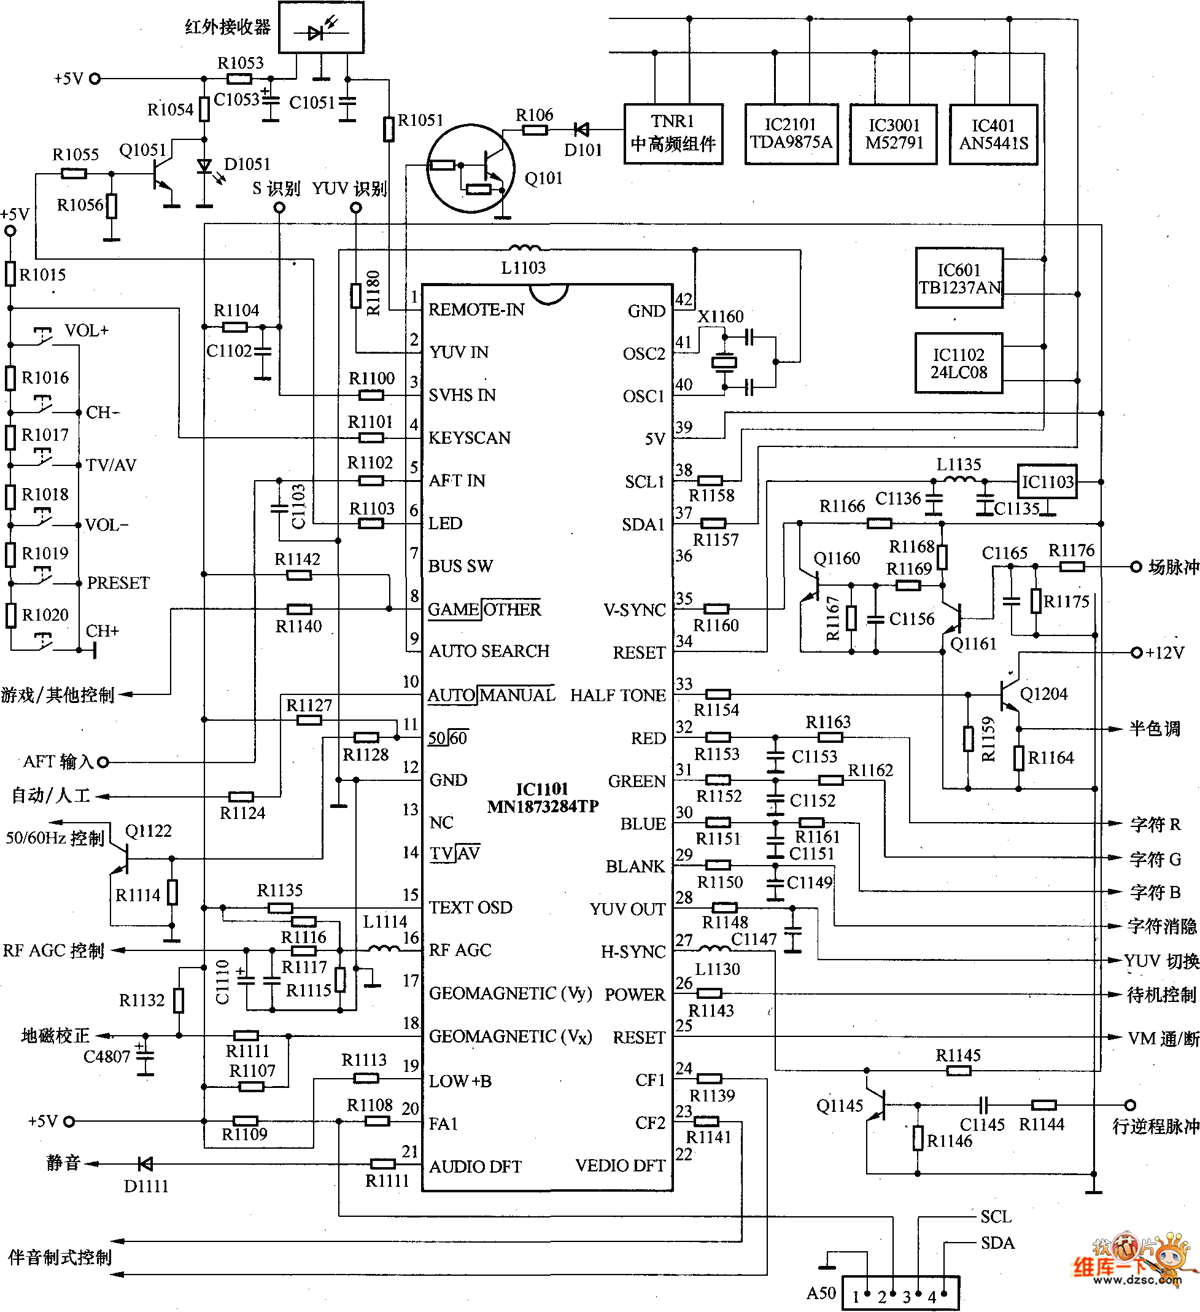 View 37 Circuit Diagram Of Crt Colour Tv